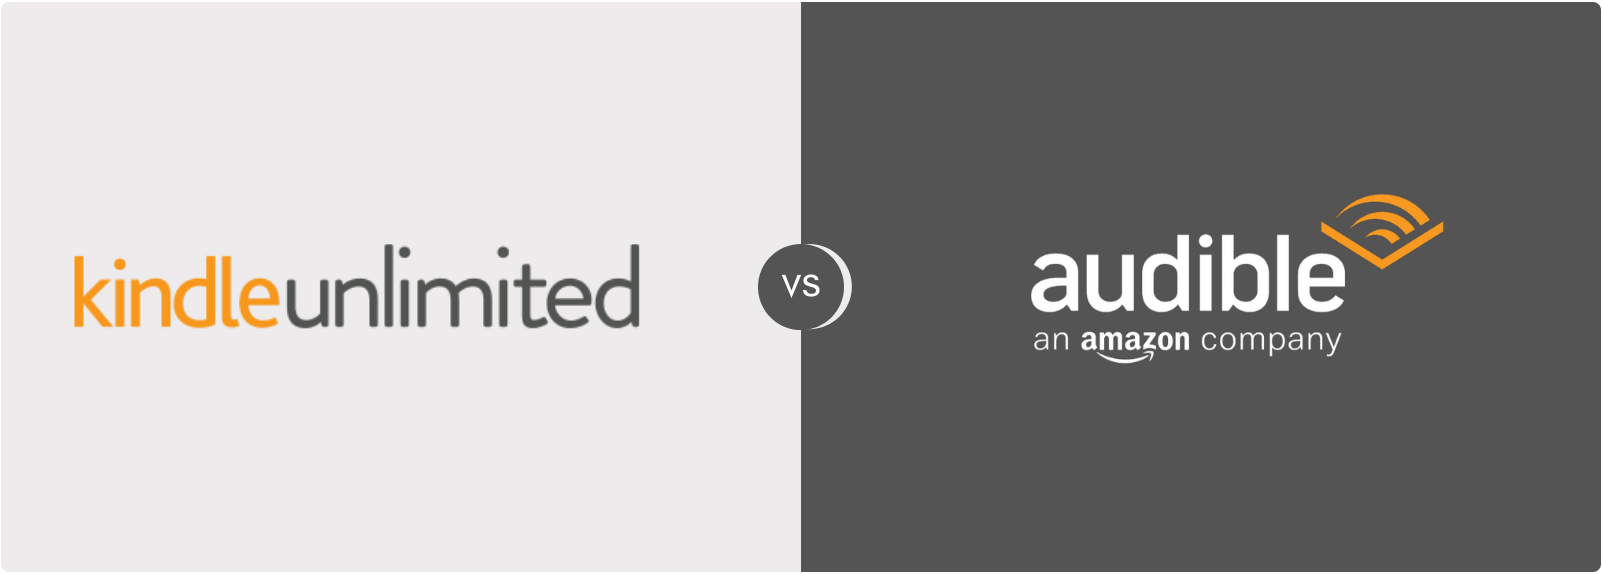 Audible vs Kindle Unlimited